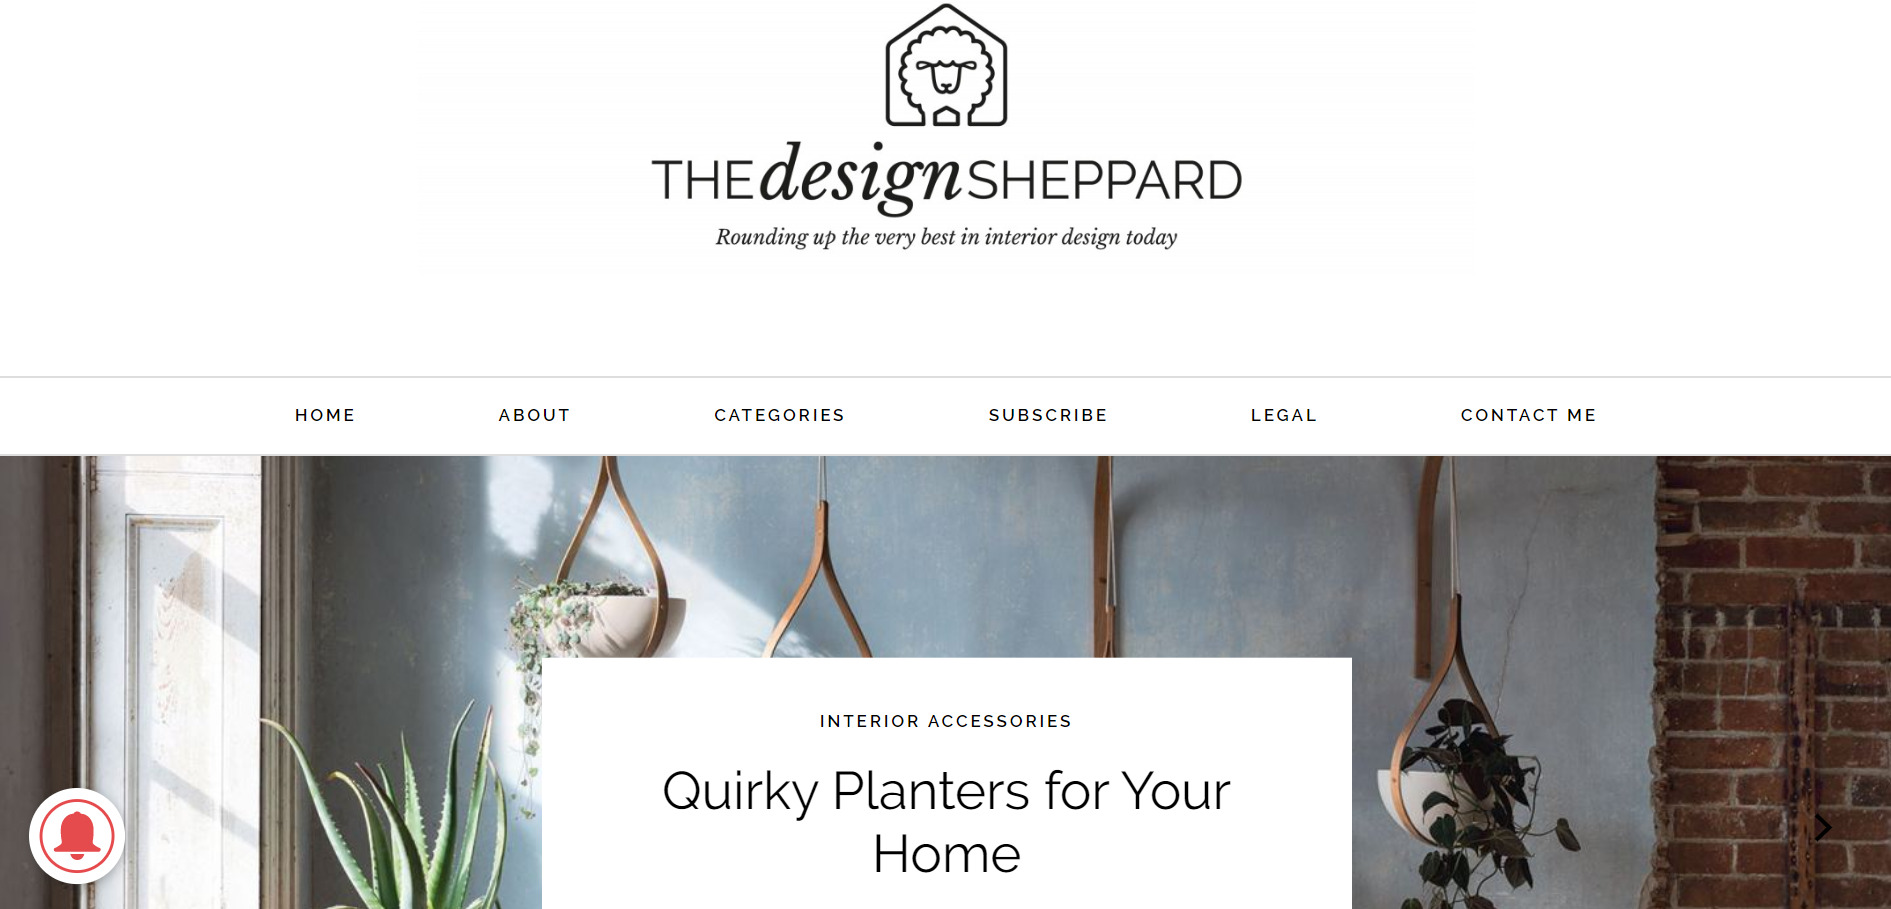 Top 10 Best Interior Design Blogs - The Design Sheppard